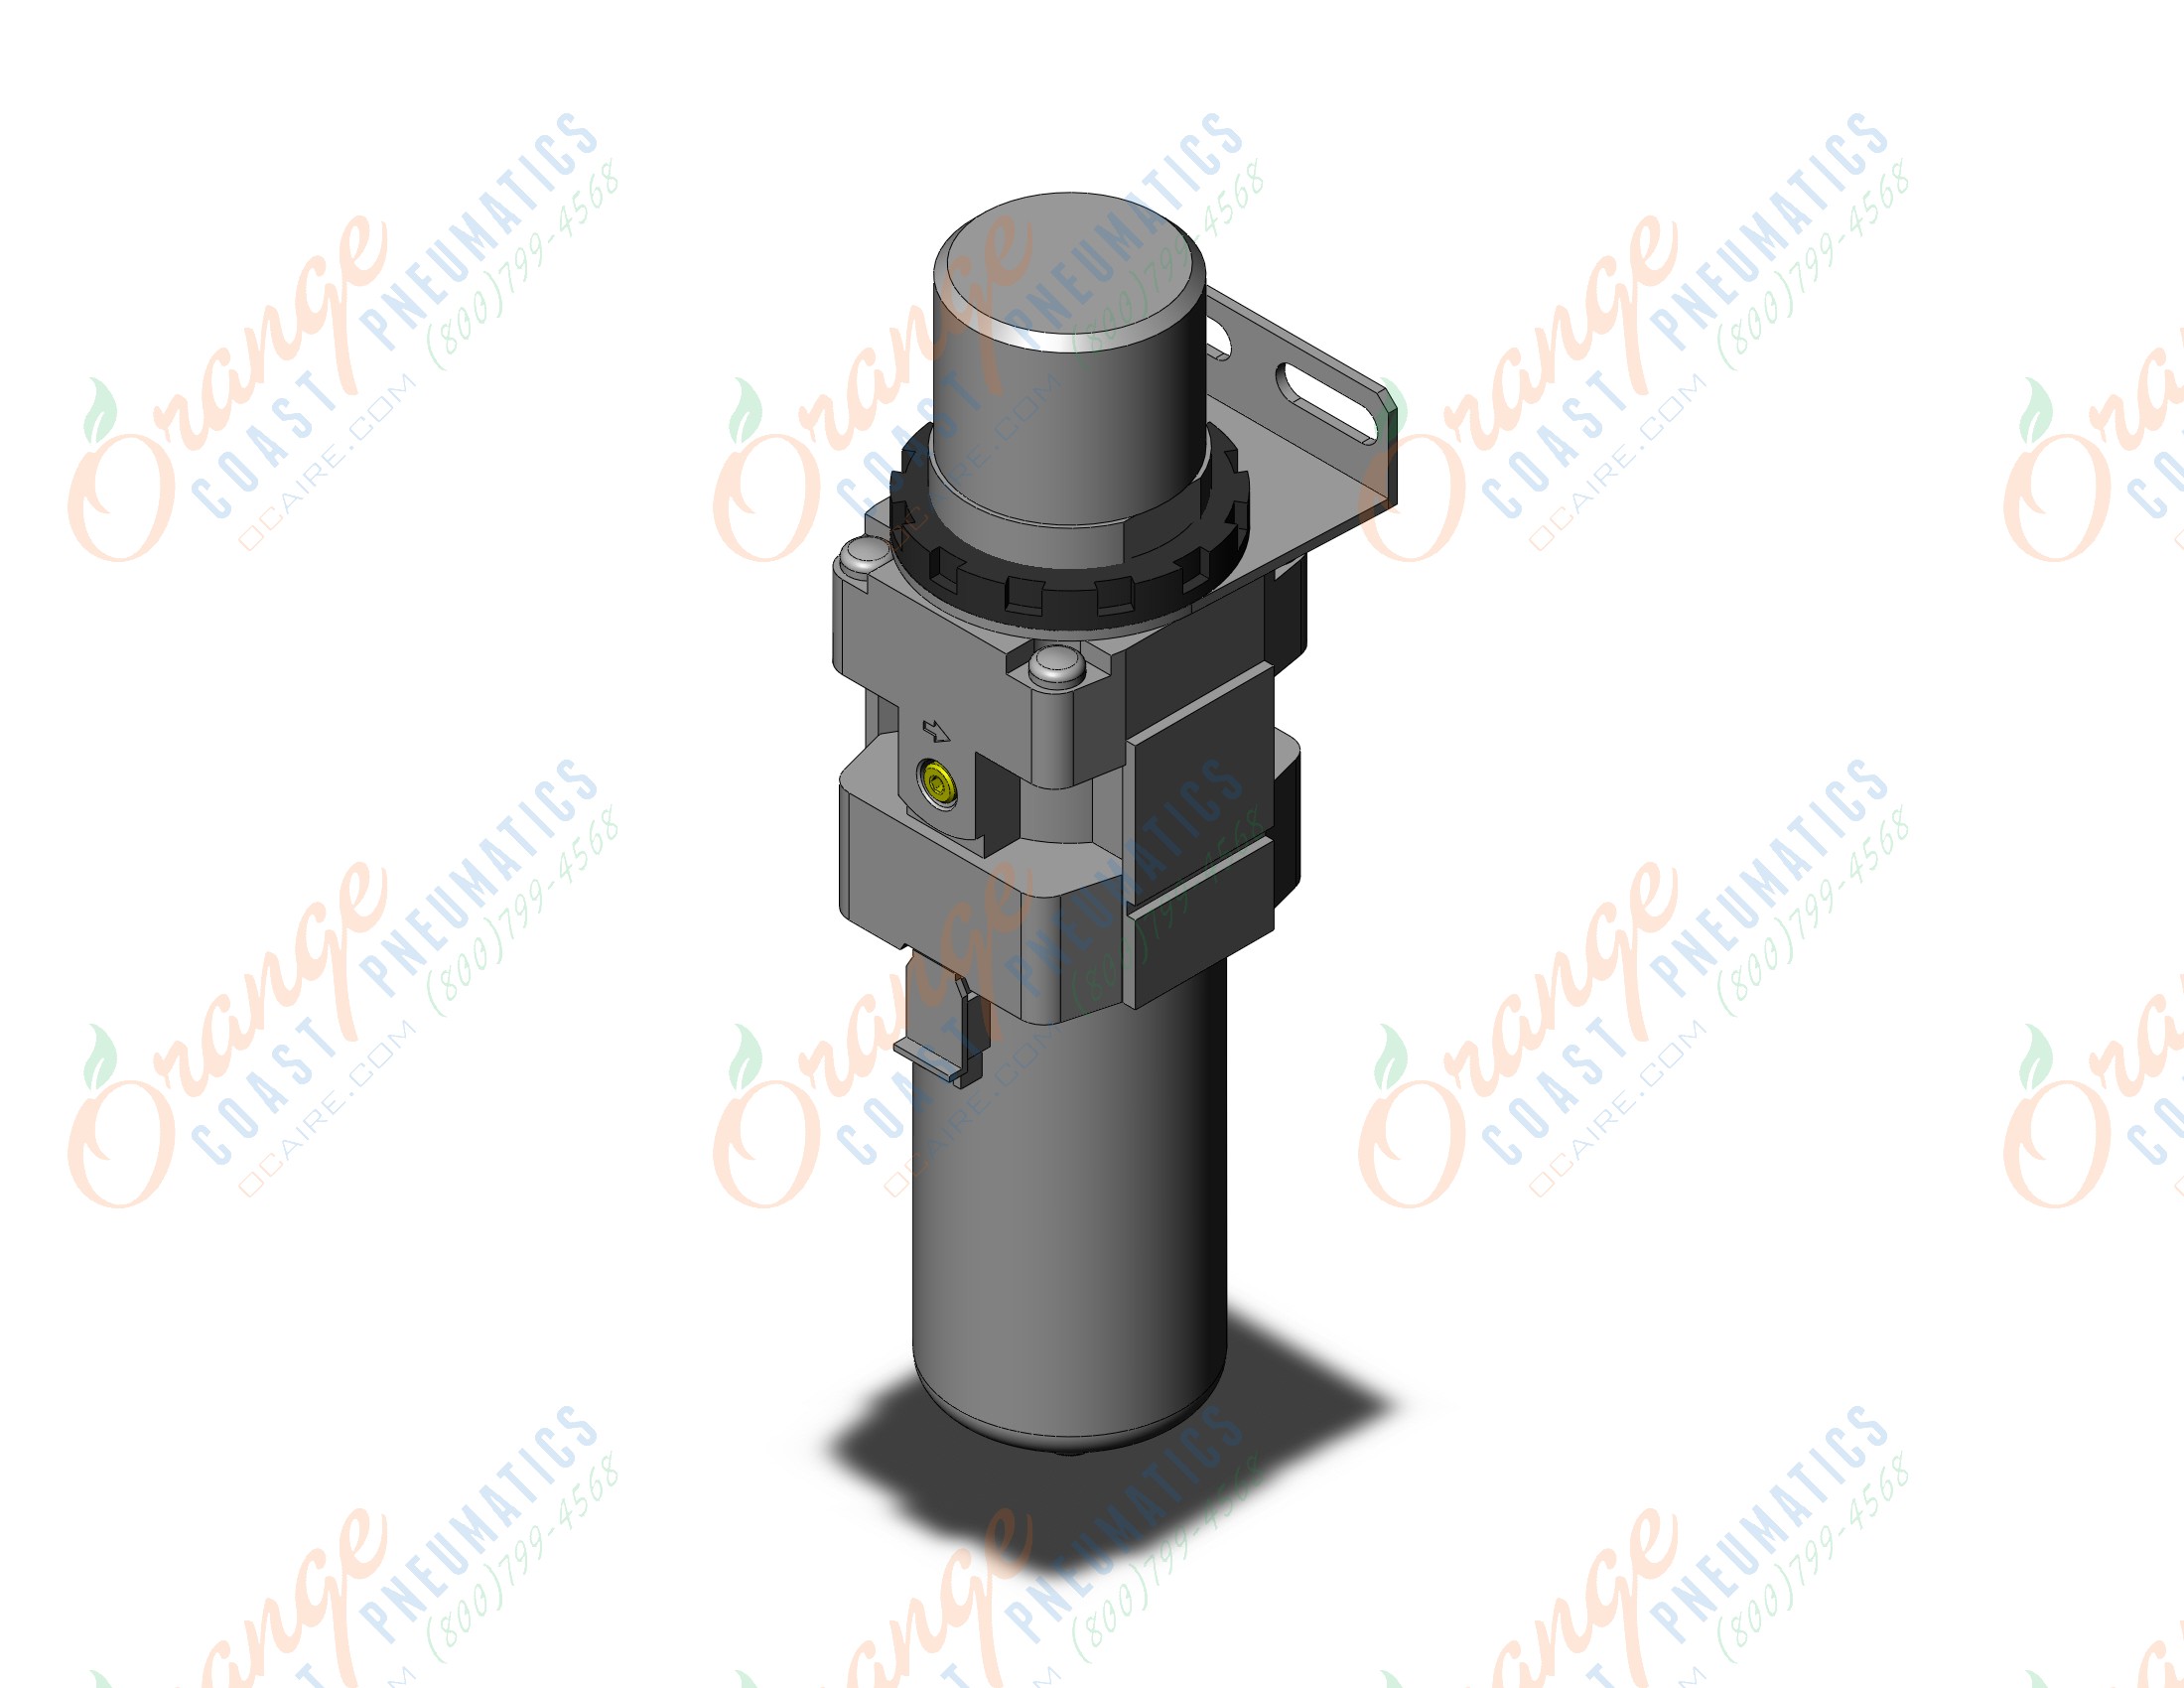 SMC AW40-F03B-8-A filter/regulator, FILTER/REGULATOR, MODULAR F.R.L.